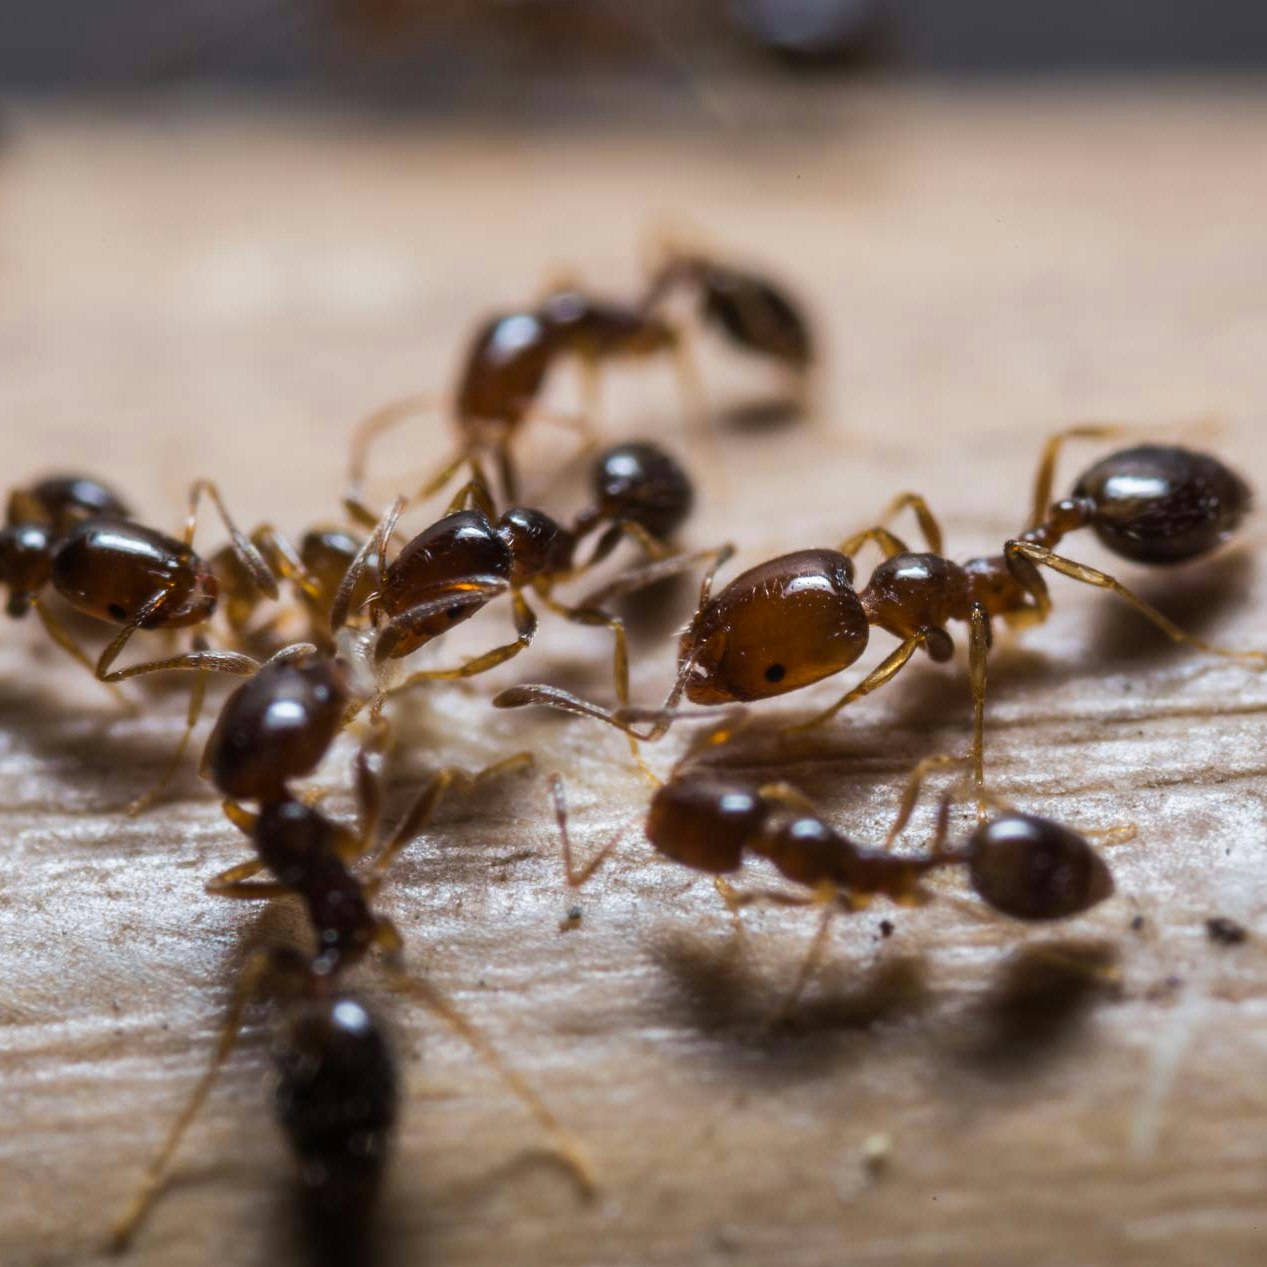 Odorous House Ant